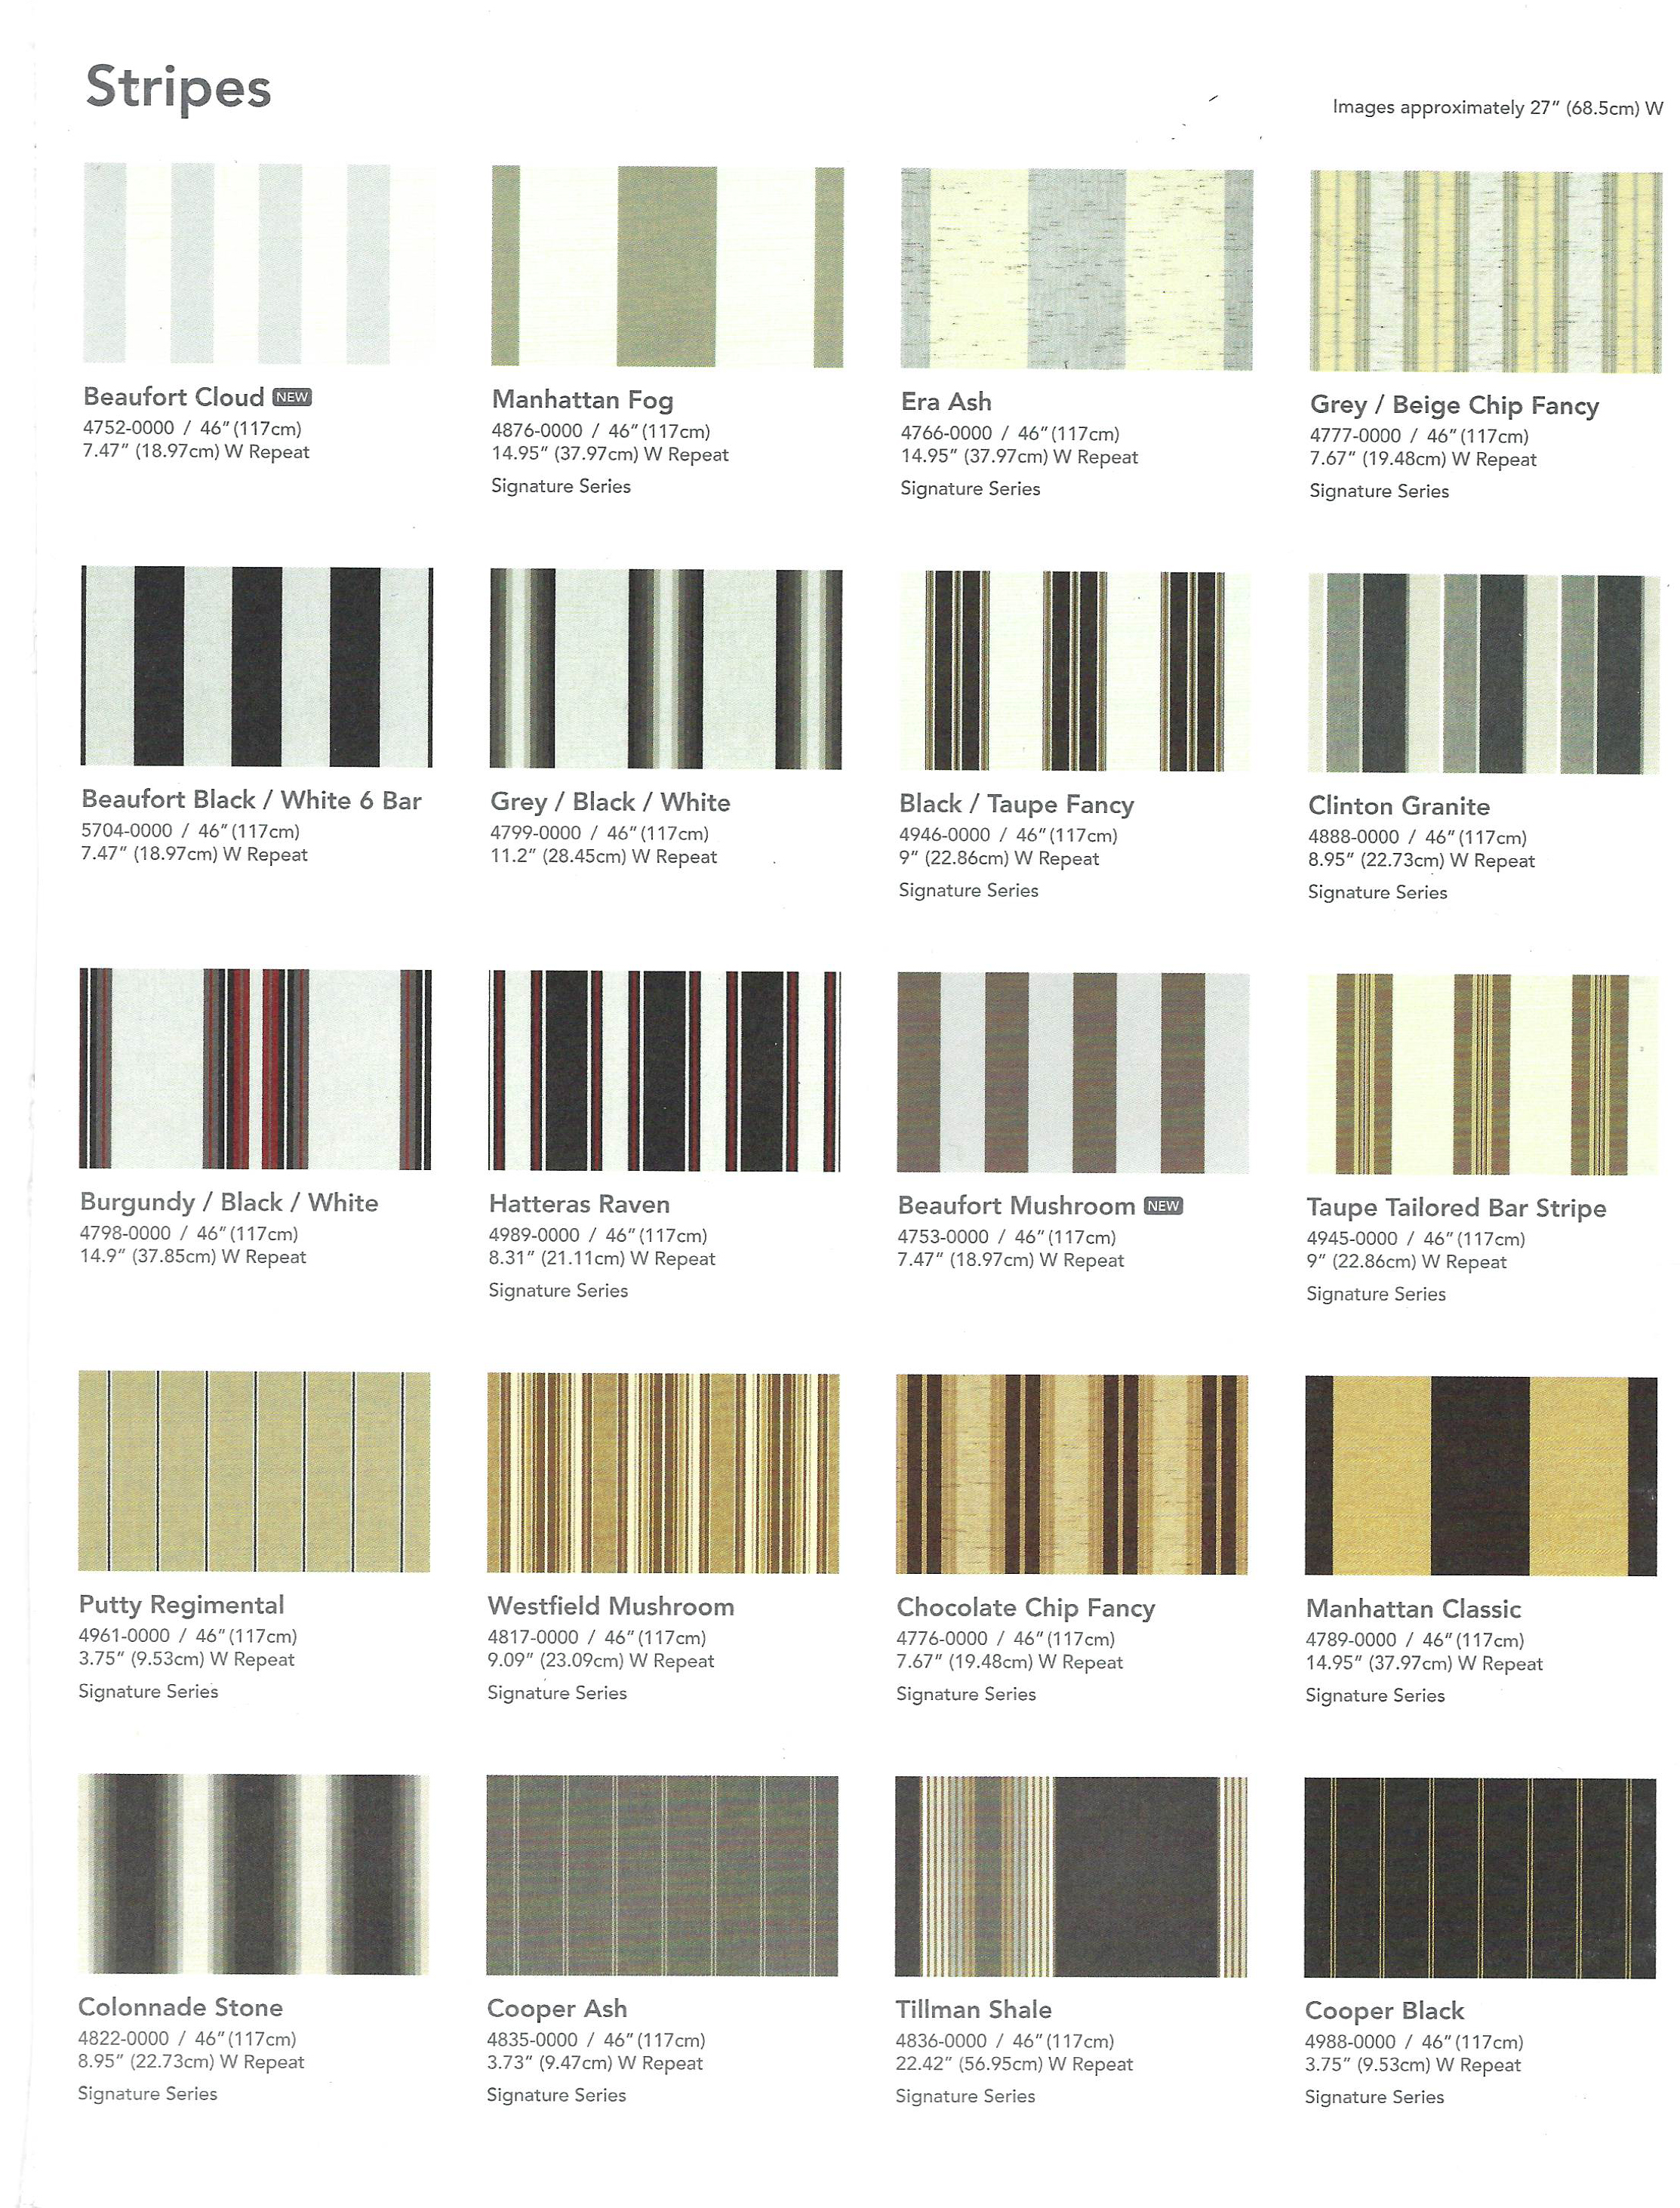 Sunbrella Outdoor Fabric Color Chart